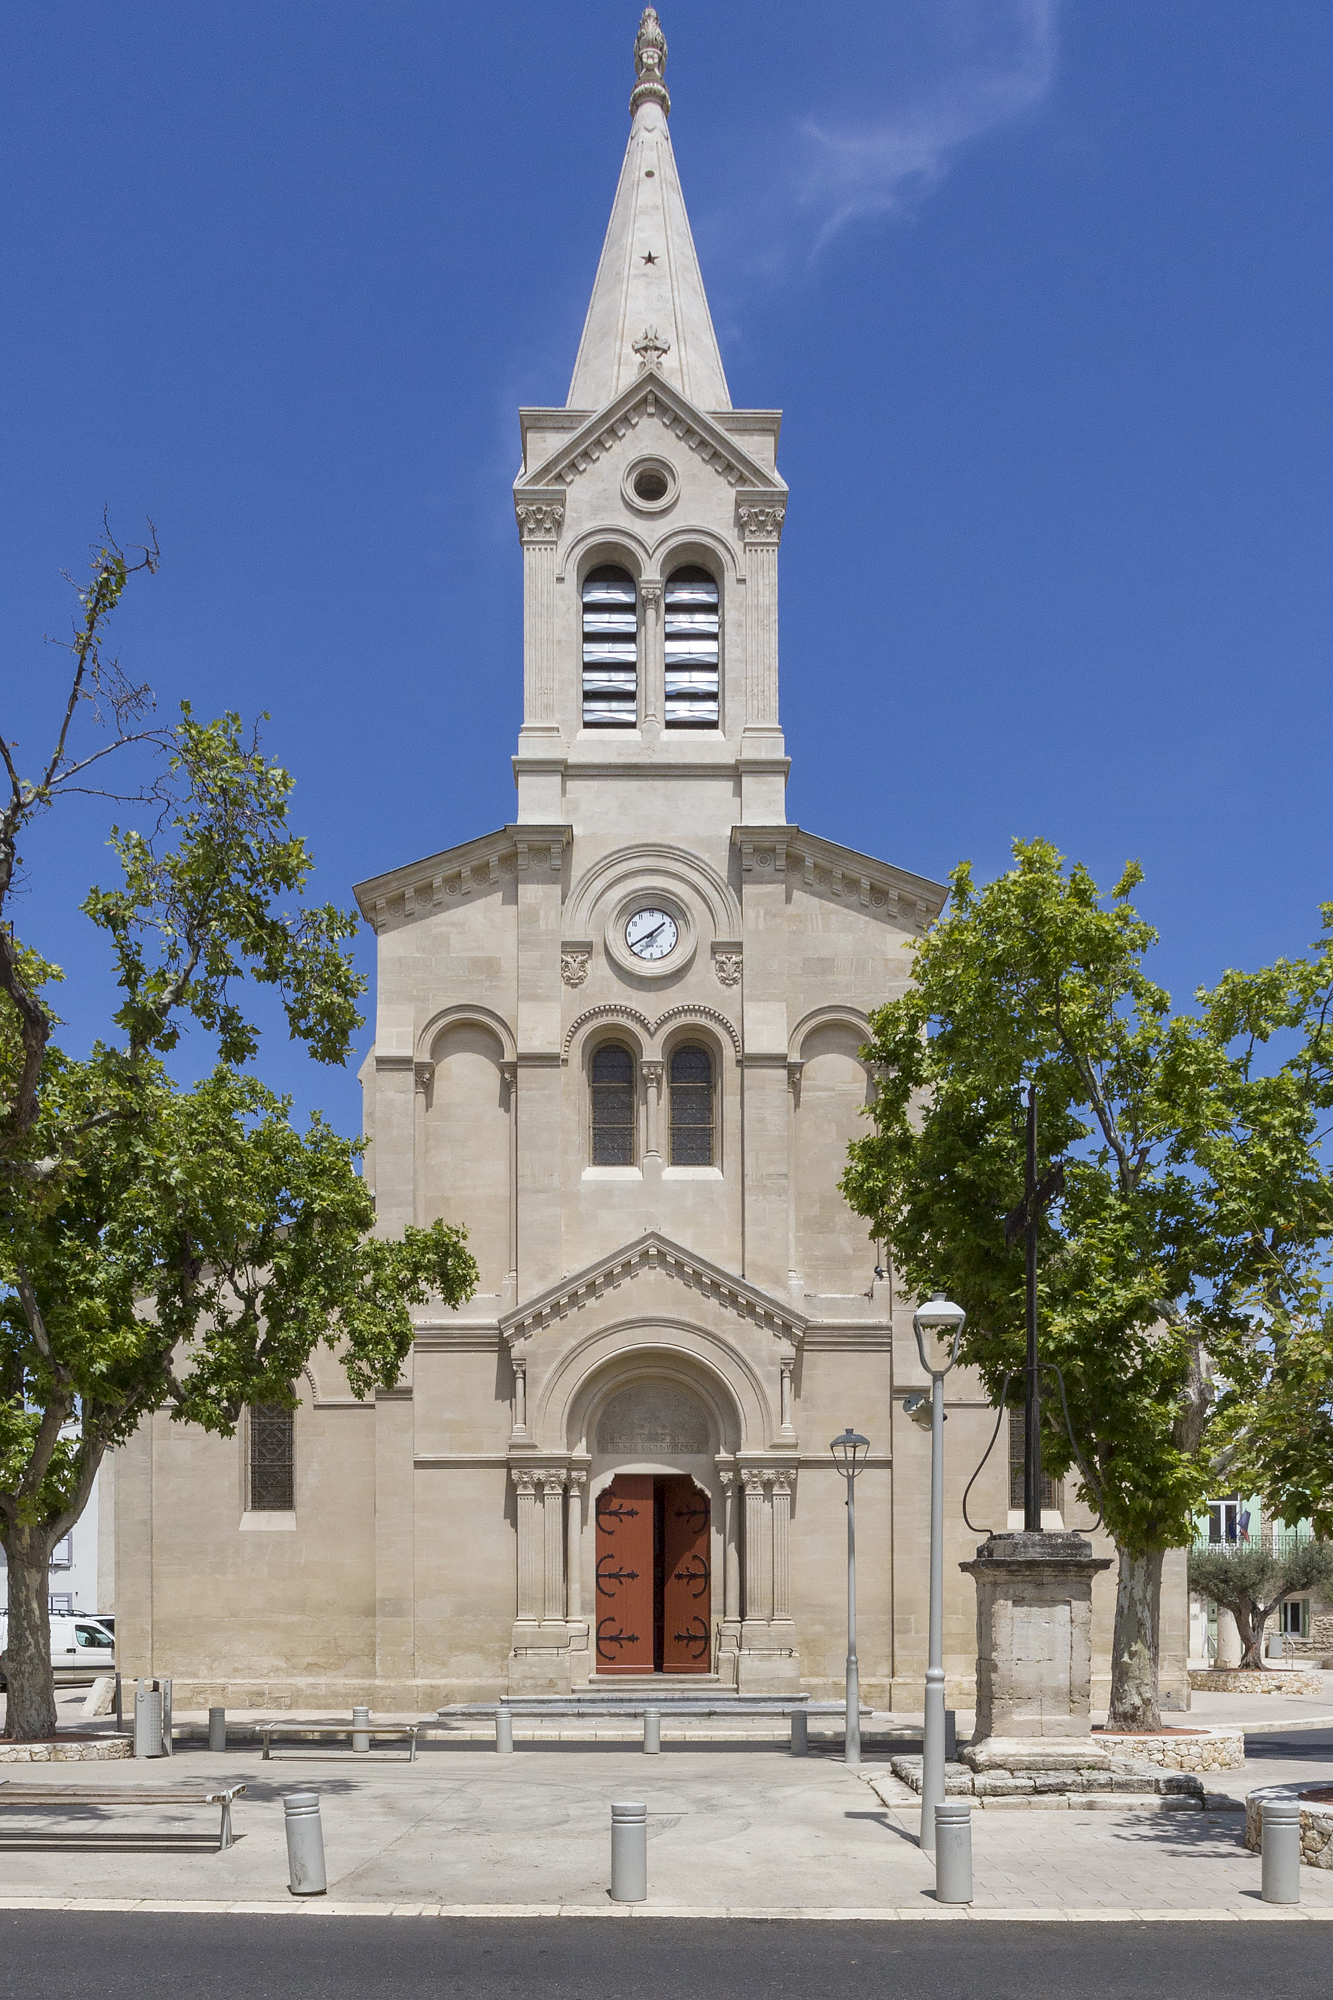 A church in Manduel, France